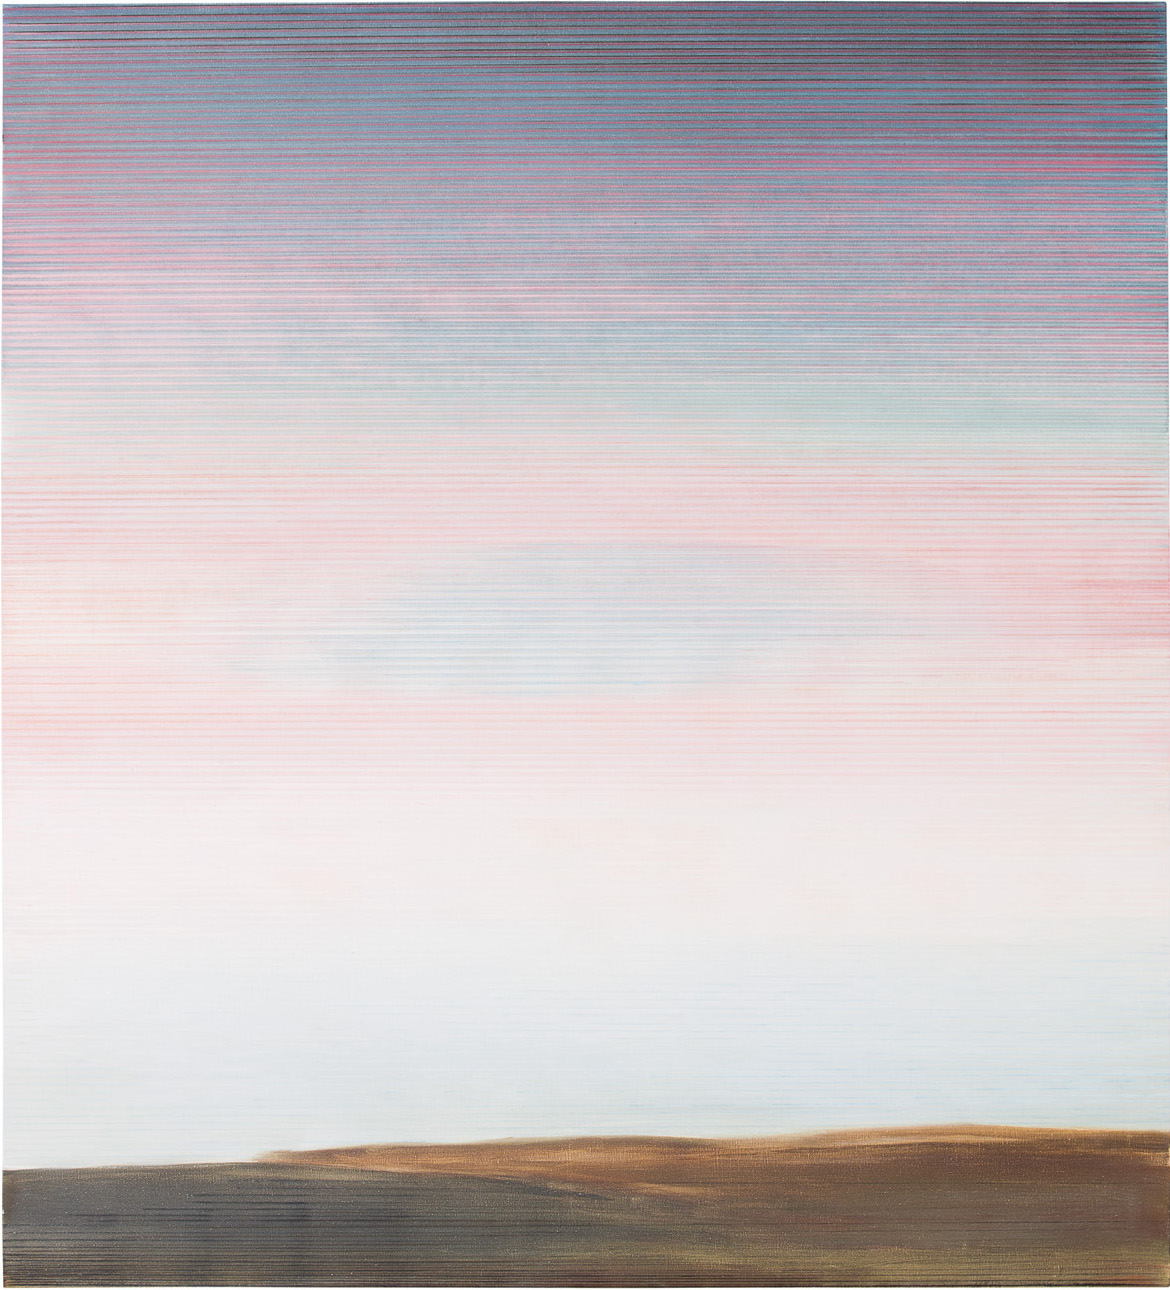 Peter Lang, Garur, 2013, Öl auf Leinwand, 200 x 180 cm